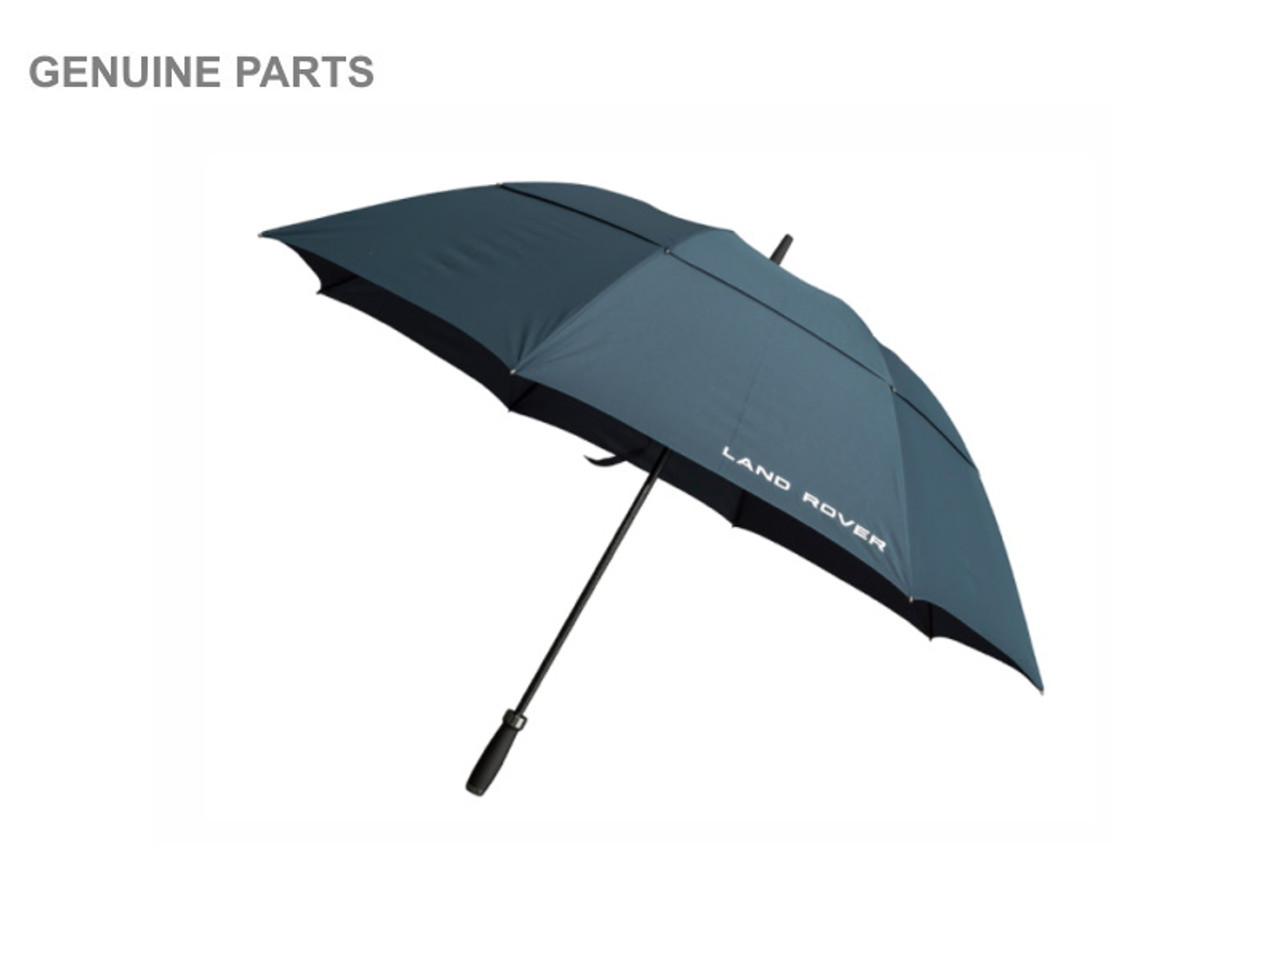 Land Rover Golf Umbrella - LEUM123NVA